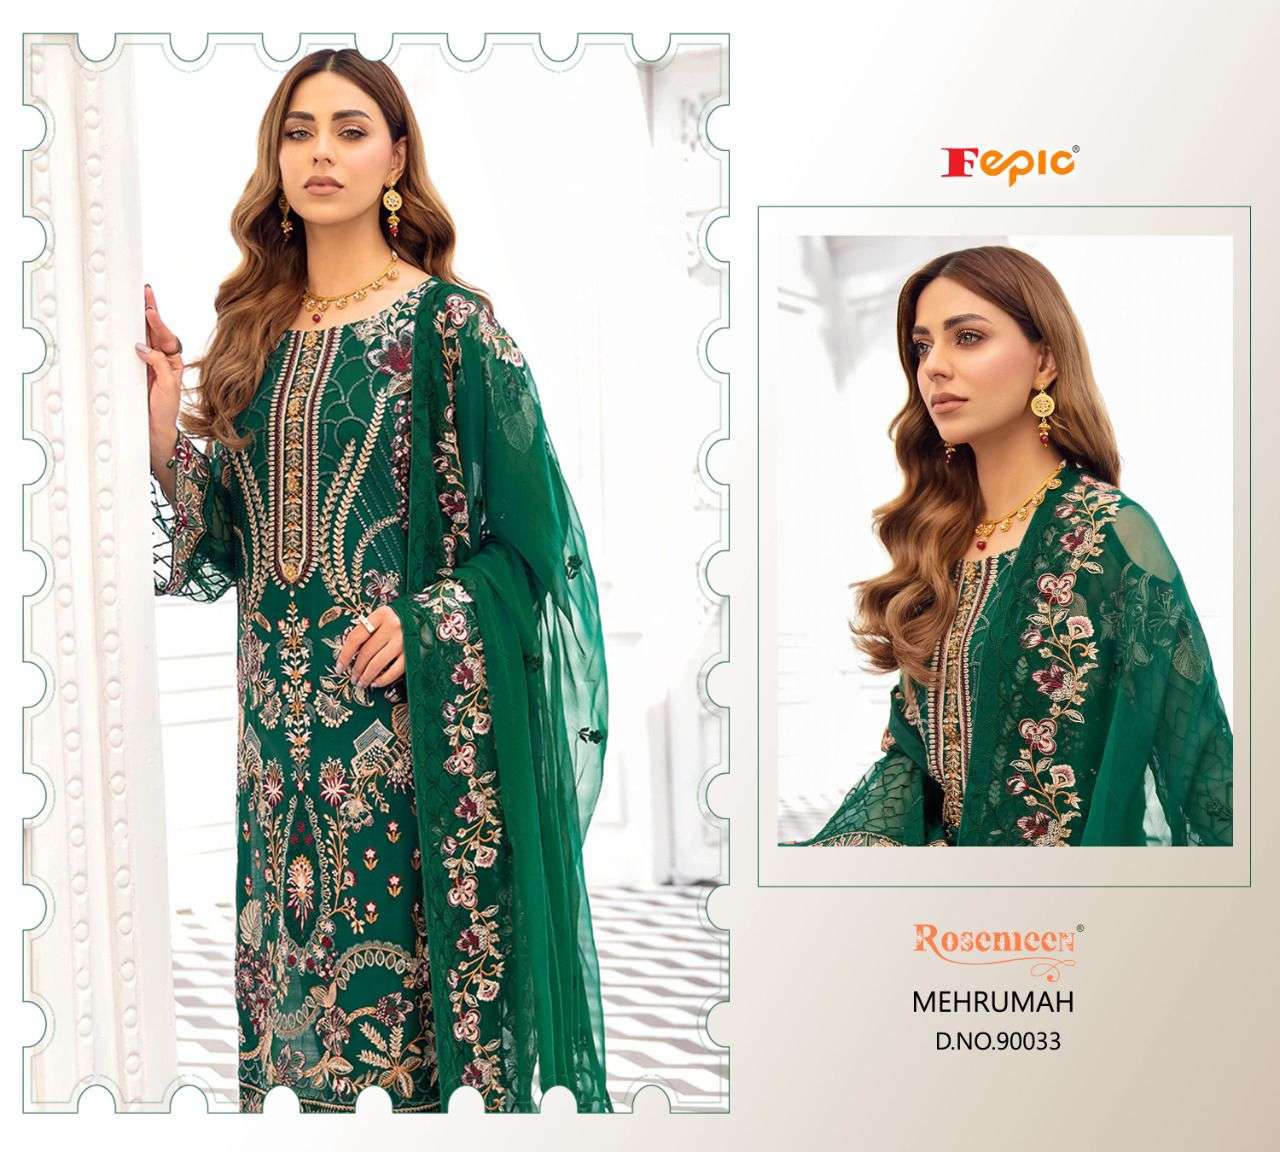 Rosemeen Mehruma By Fepic Designer Wholesale Online Salwar Suit Set